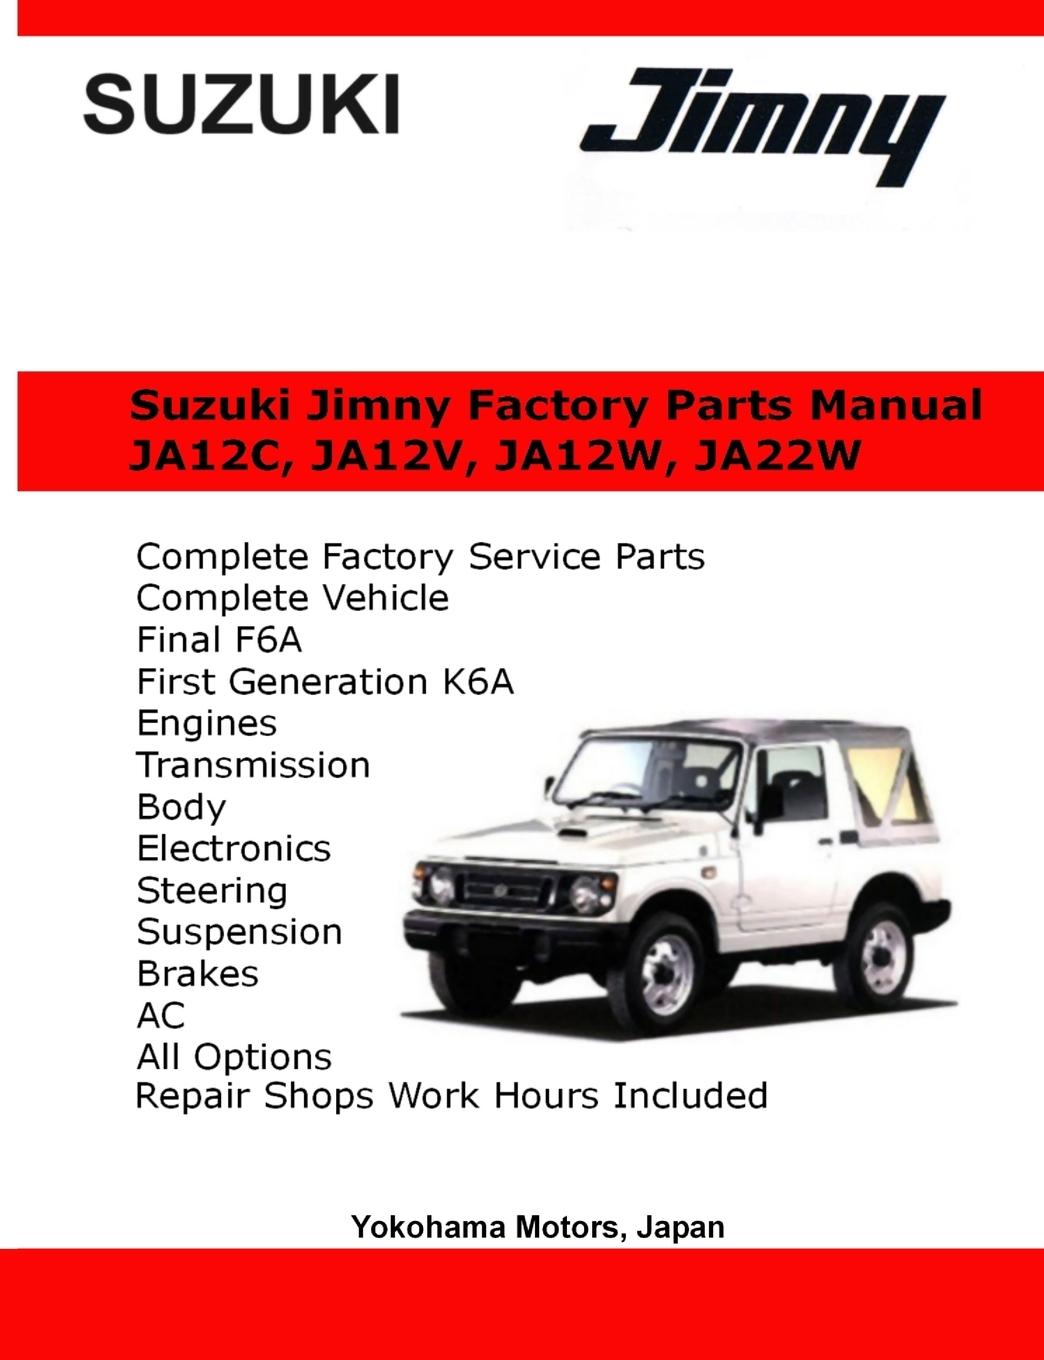 Книга Suzuki Jimny English Factory Parts Manual JA12, JA22W Series James Danko